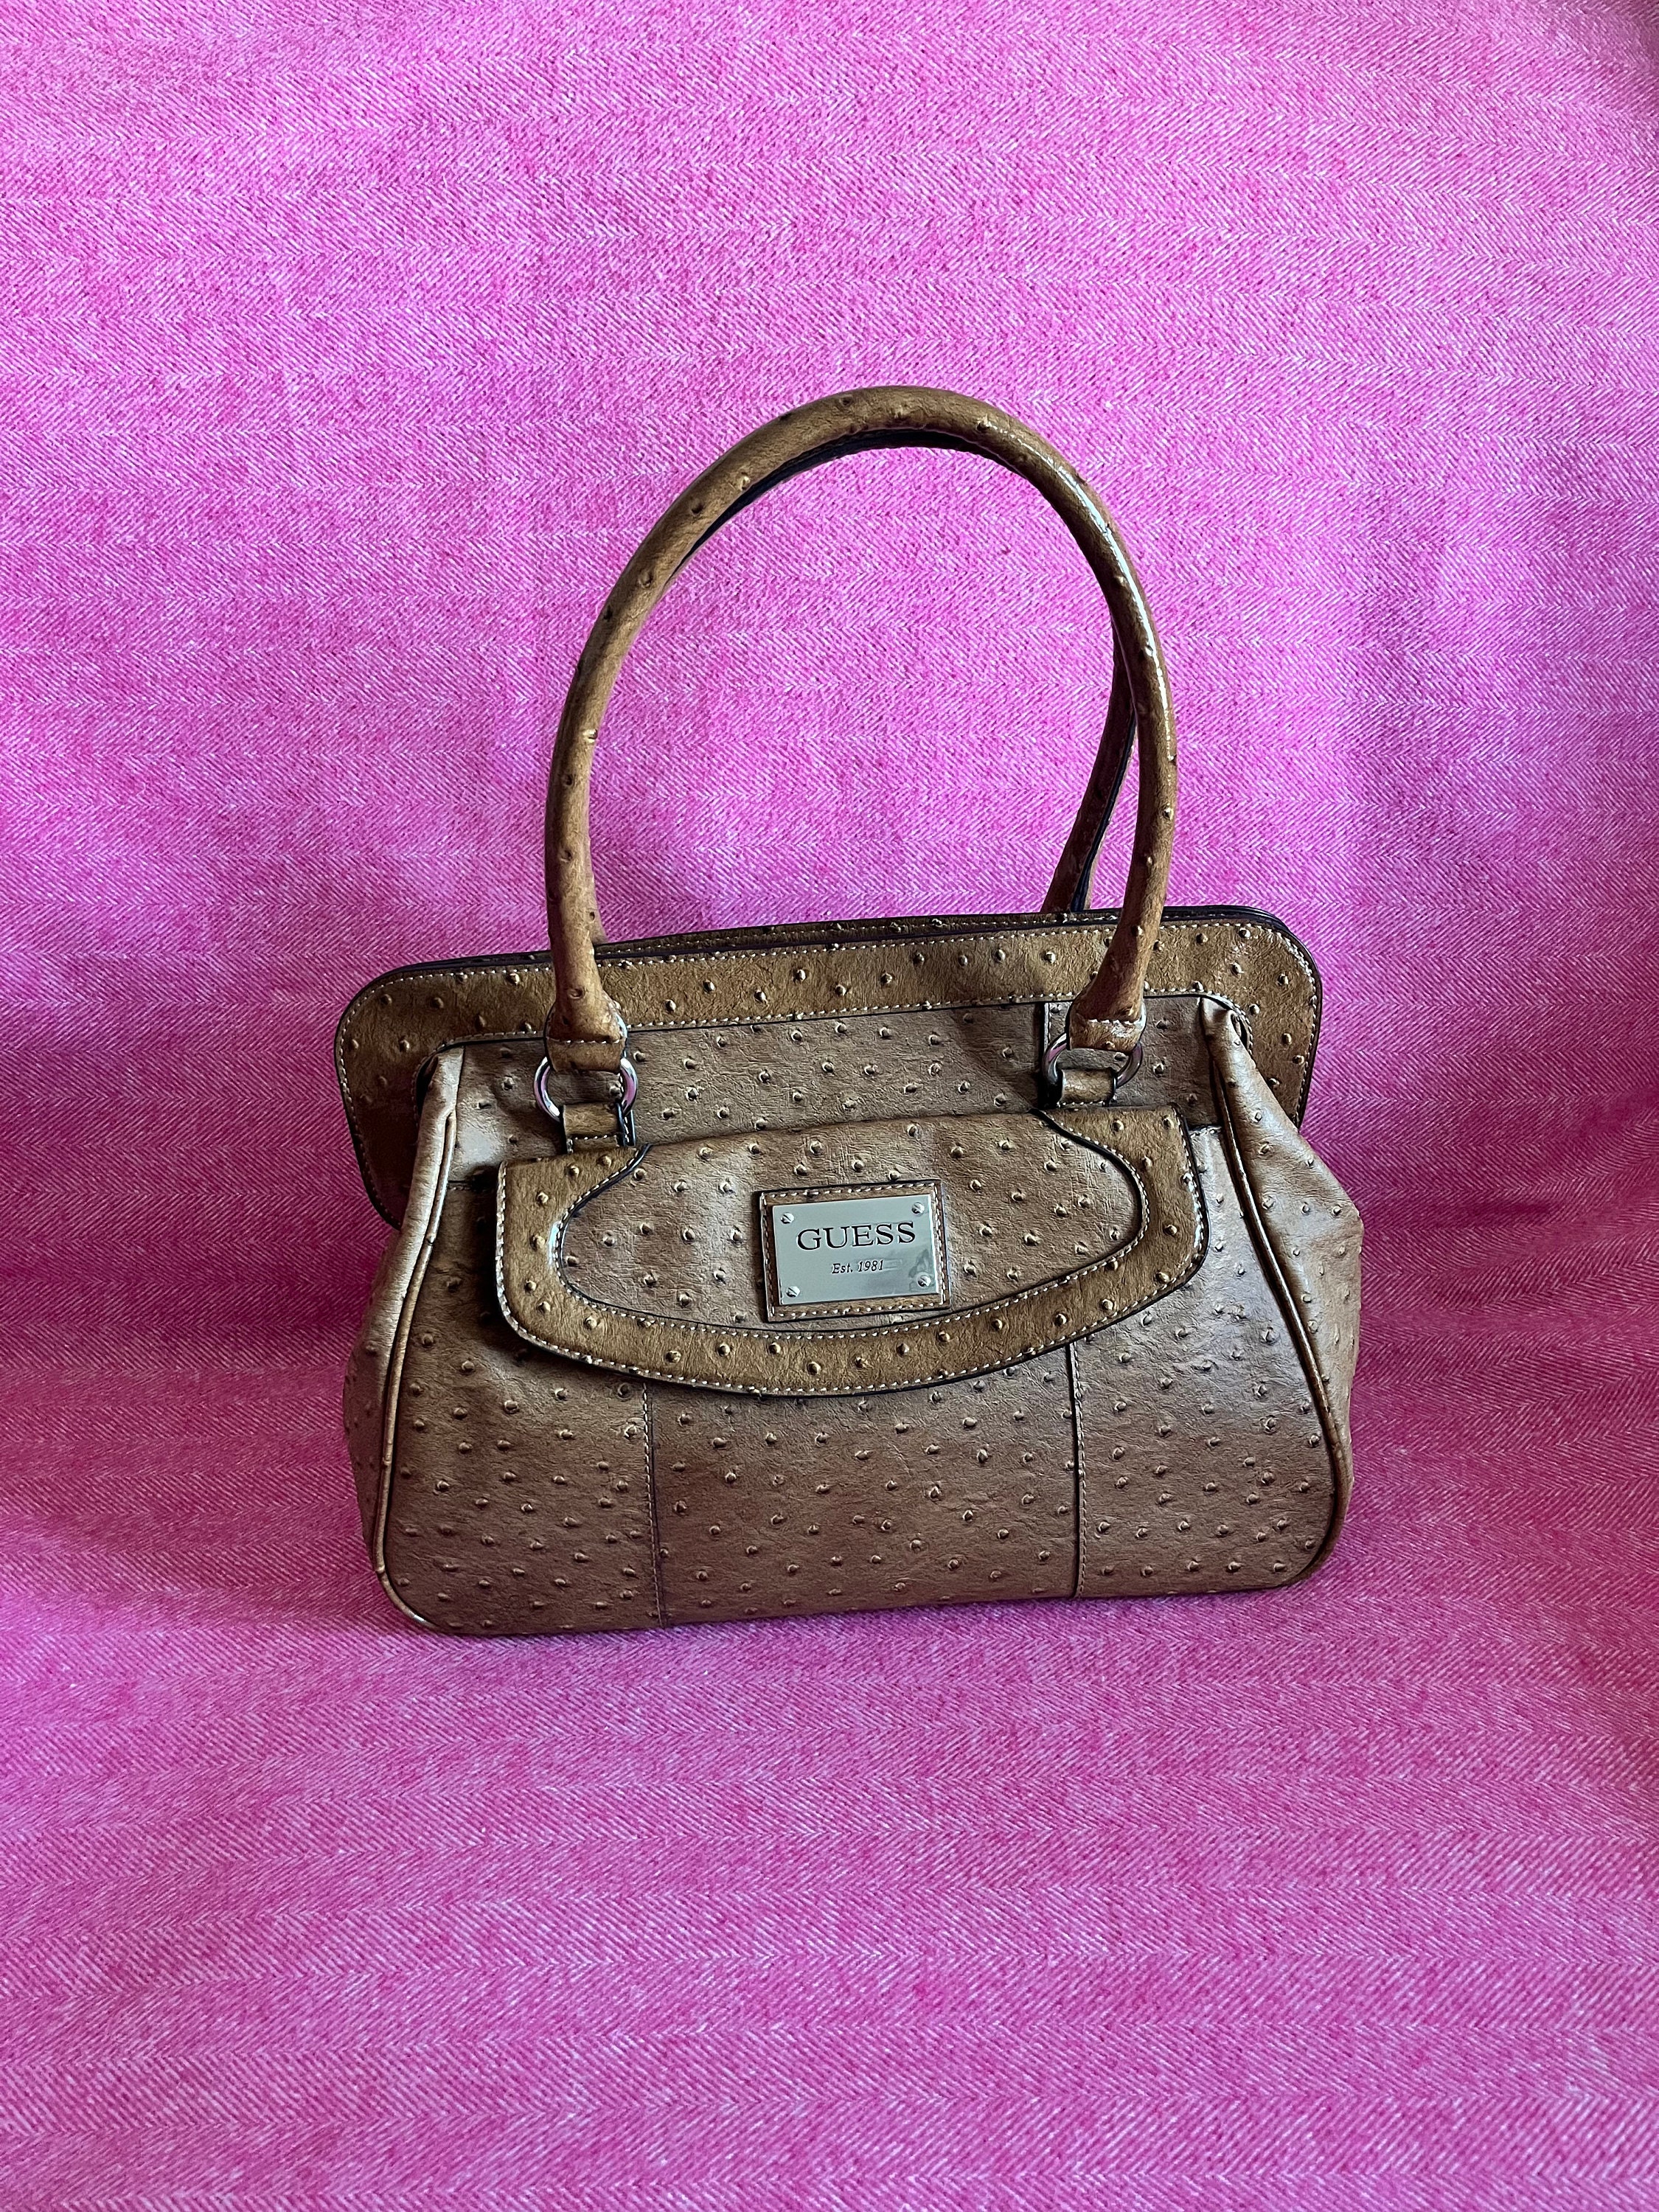 GUESS Plastic Vintage Handbags | Mercari